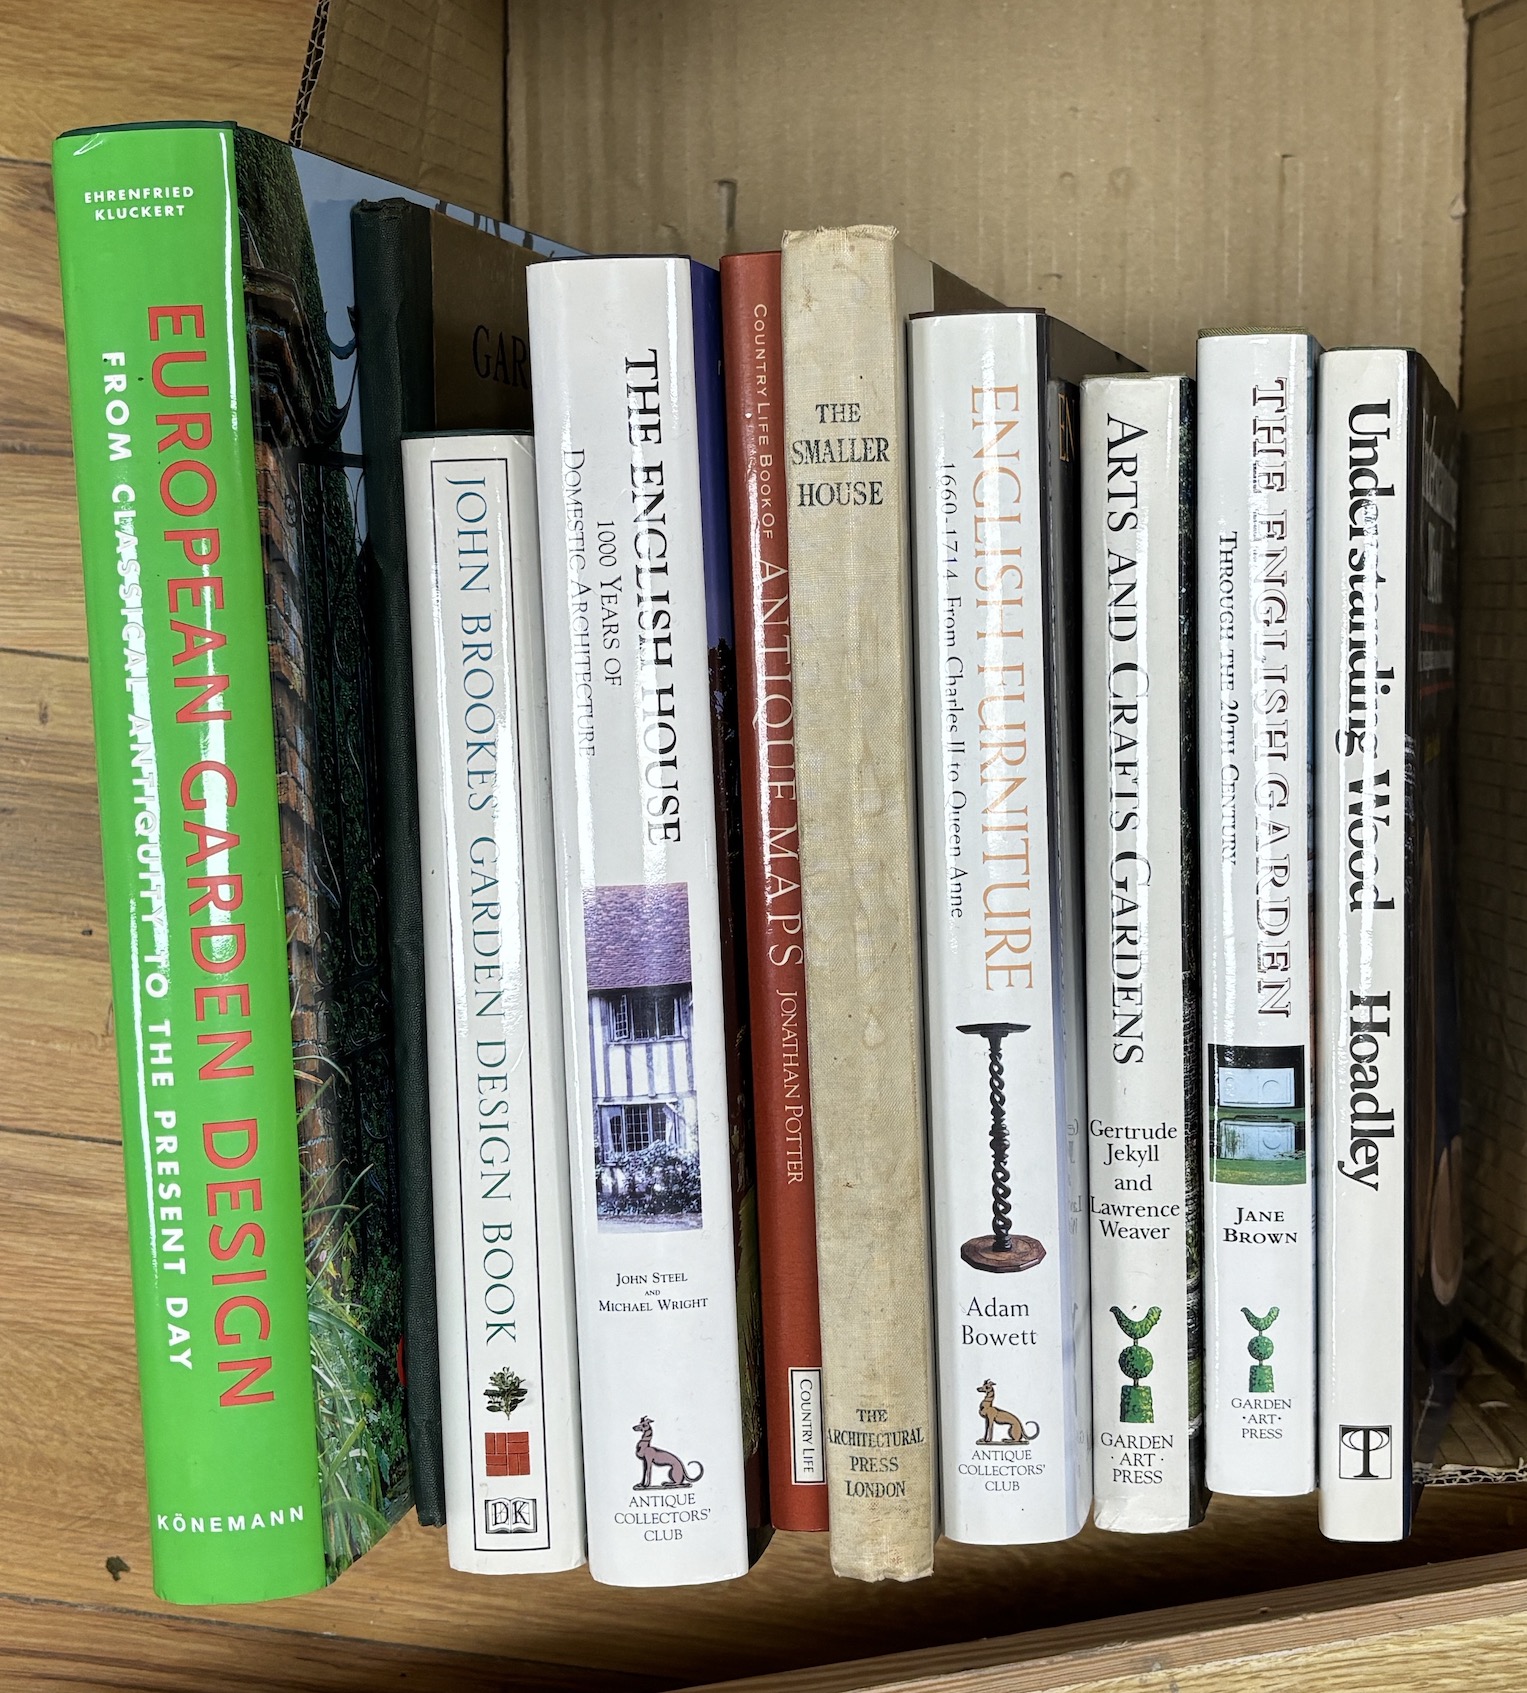 Ten reference books on Furniture and Design, including; European Garden Design, Understanding Wood, The English Garden, English Furniture, Garden Design Book, etc.